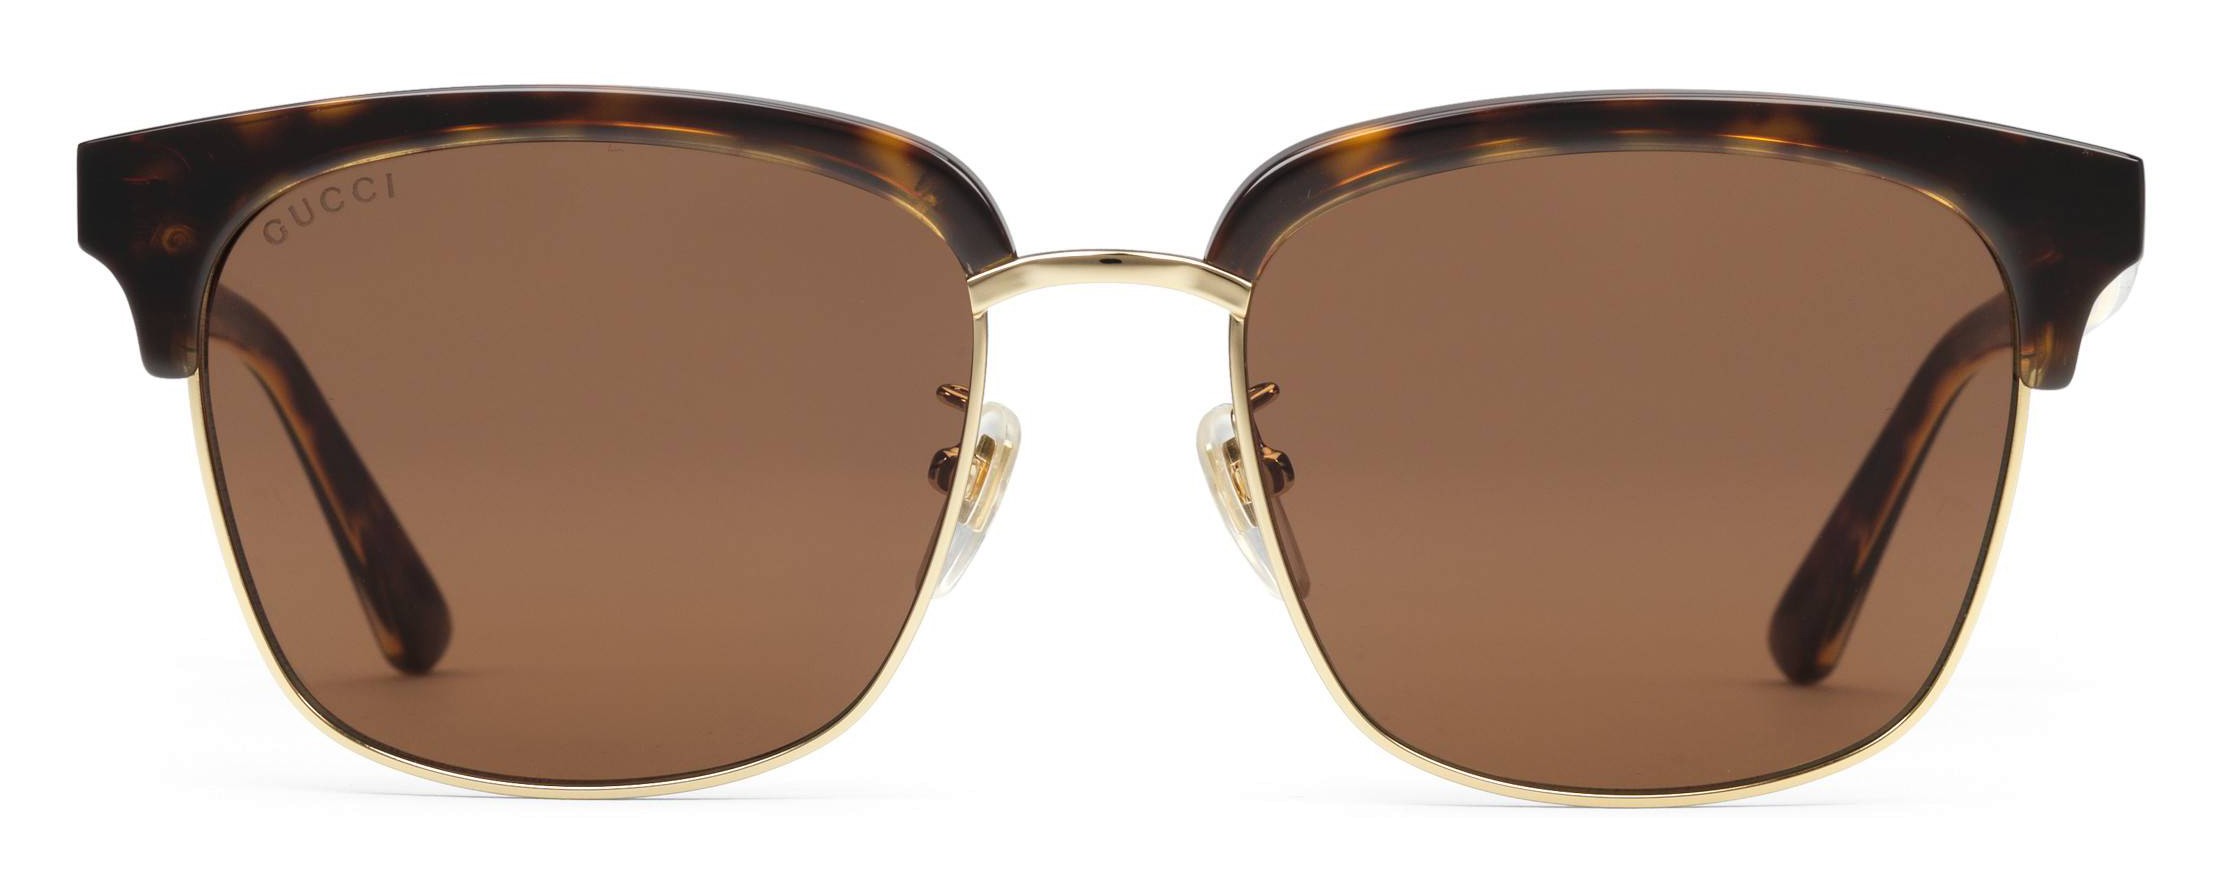 Gucci - Rectangular Metal Sunglasses - Shiny Gold and Dark Turtle